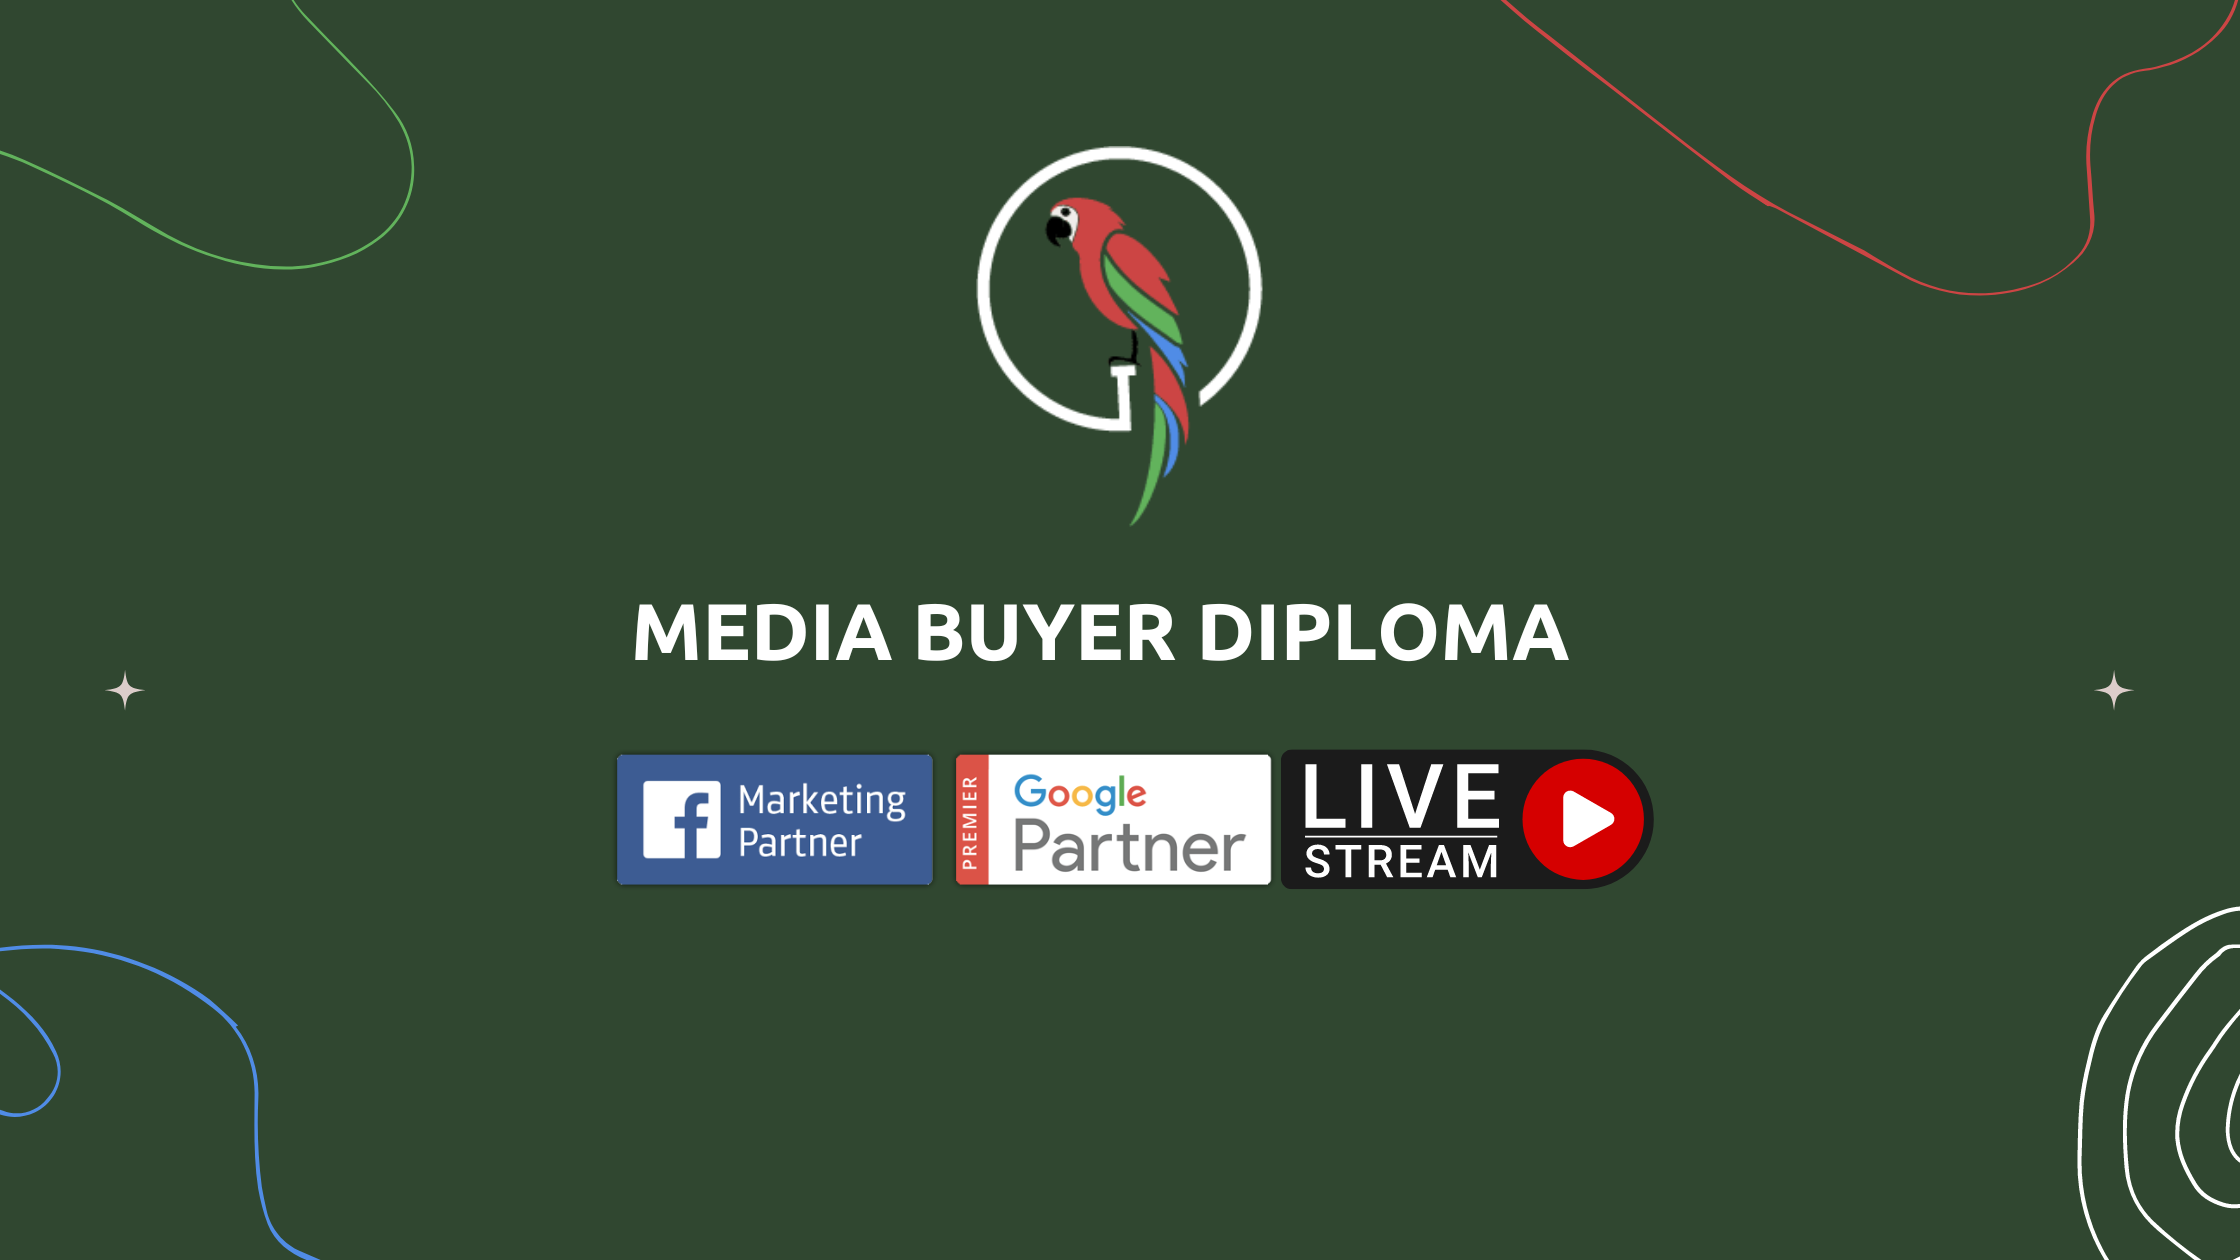 Media buyer diploma in Egypt